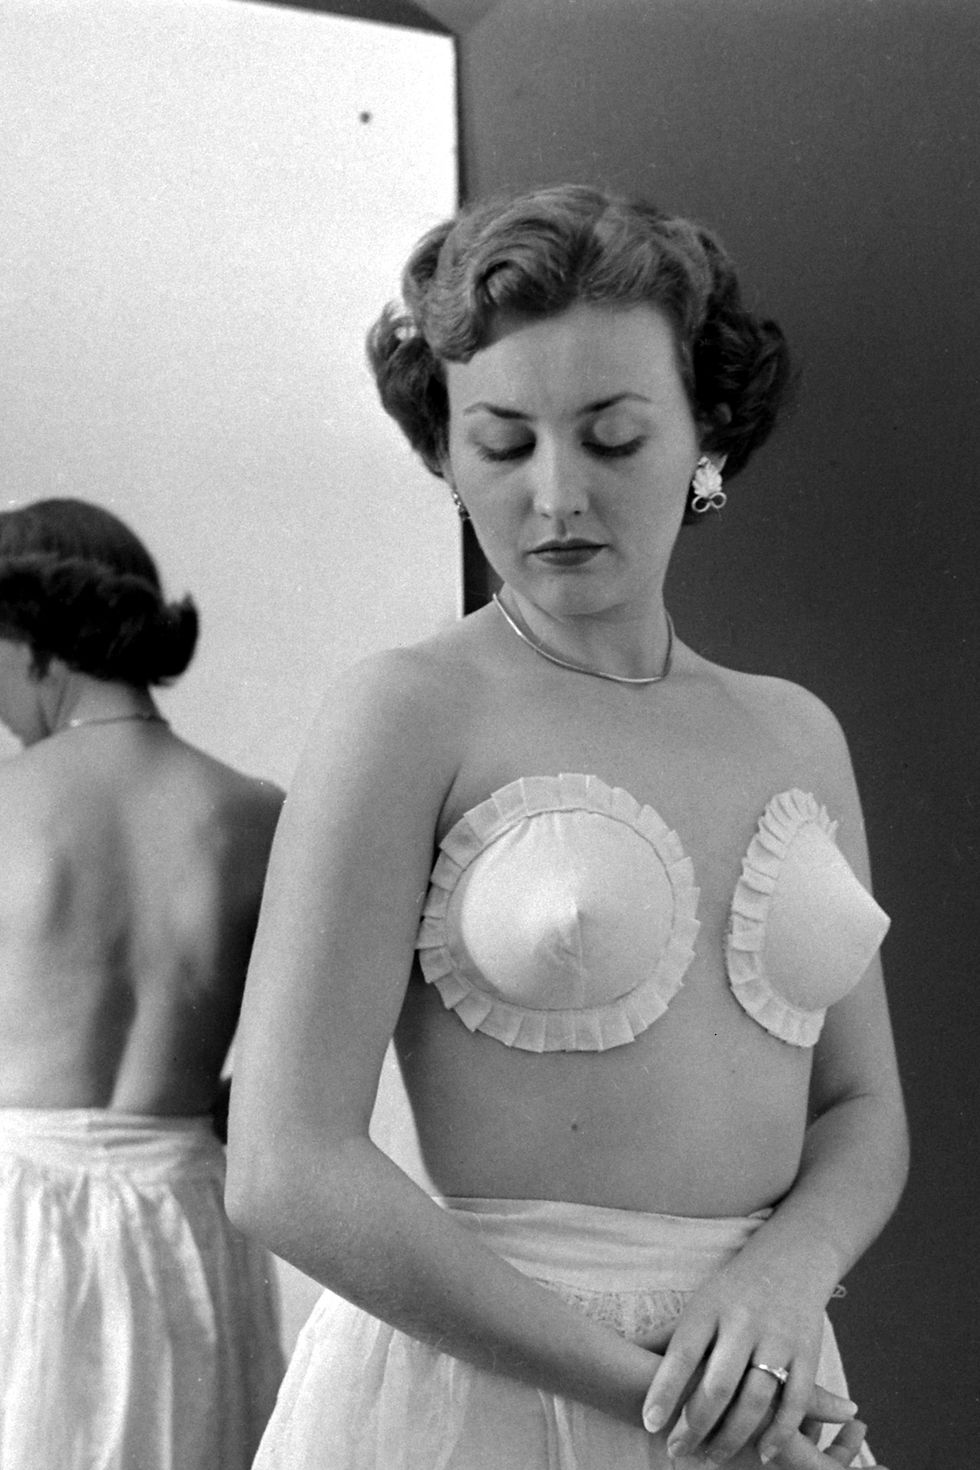 Cotton On Stick-on Bra, Women's Fashion, New Undergarments